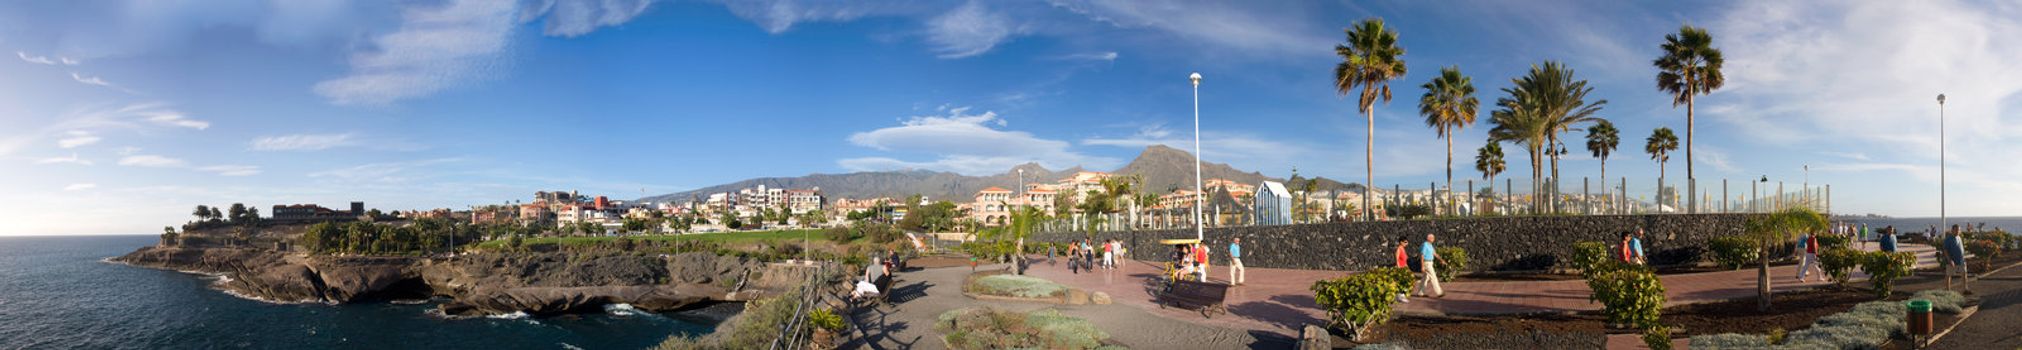 Tenerife Panorama landscape